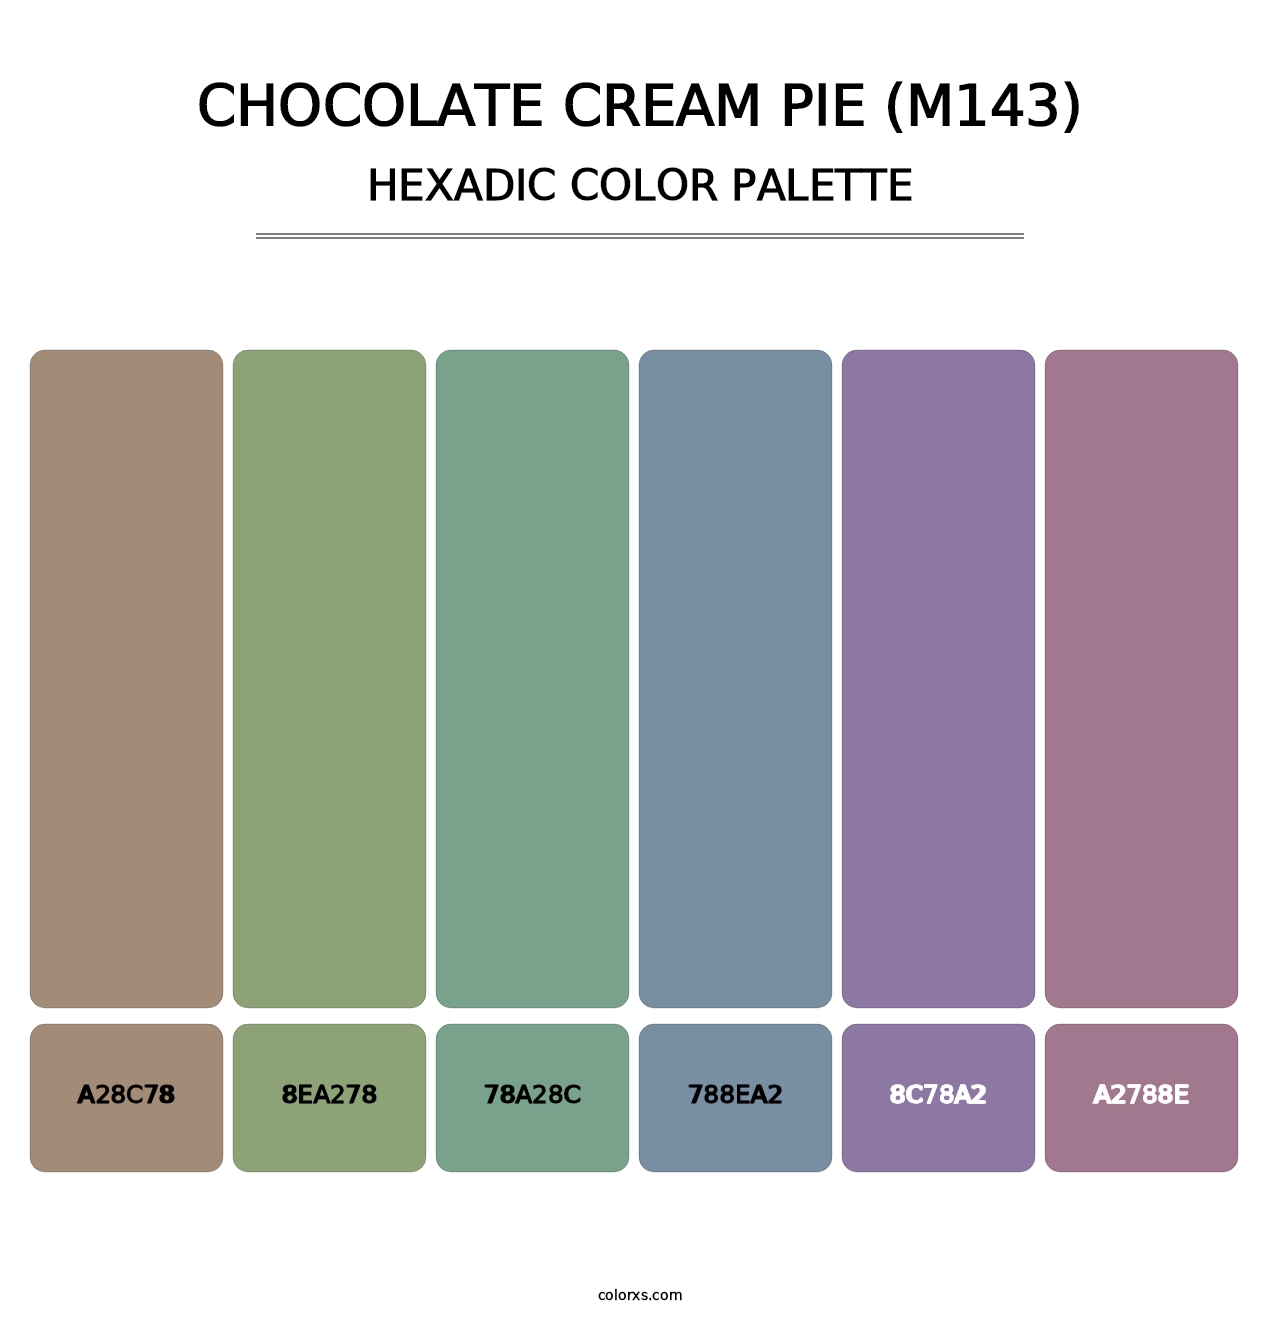 Chocolate Cream Pie (M143) - Hexadic Color Palette